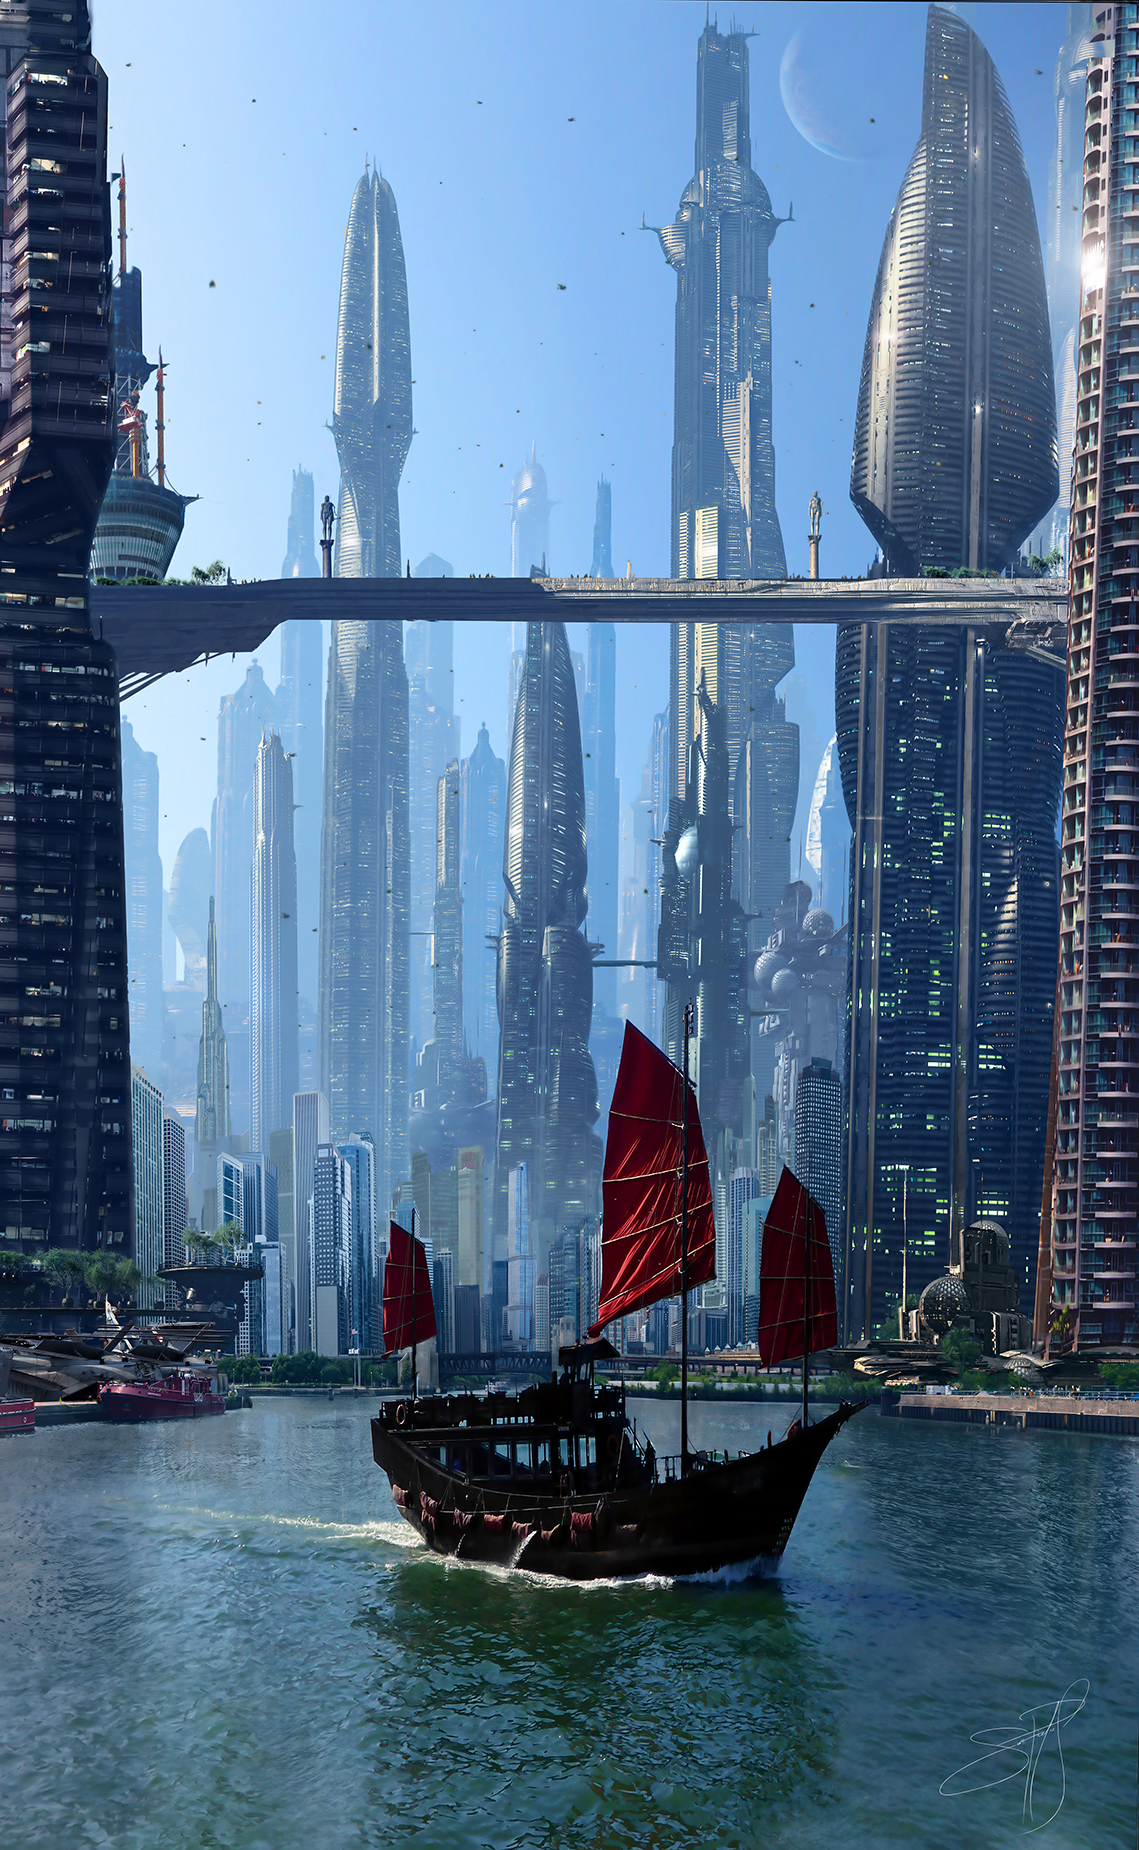 Futuristic City 7 by Scott Richard